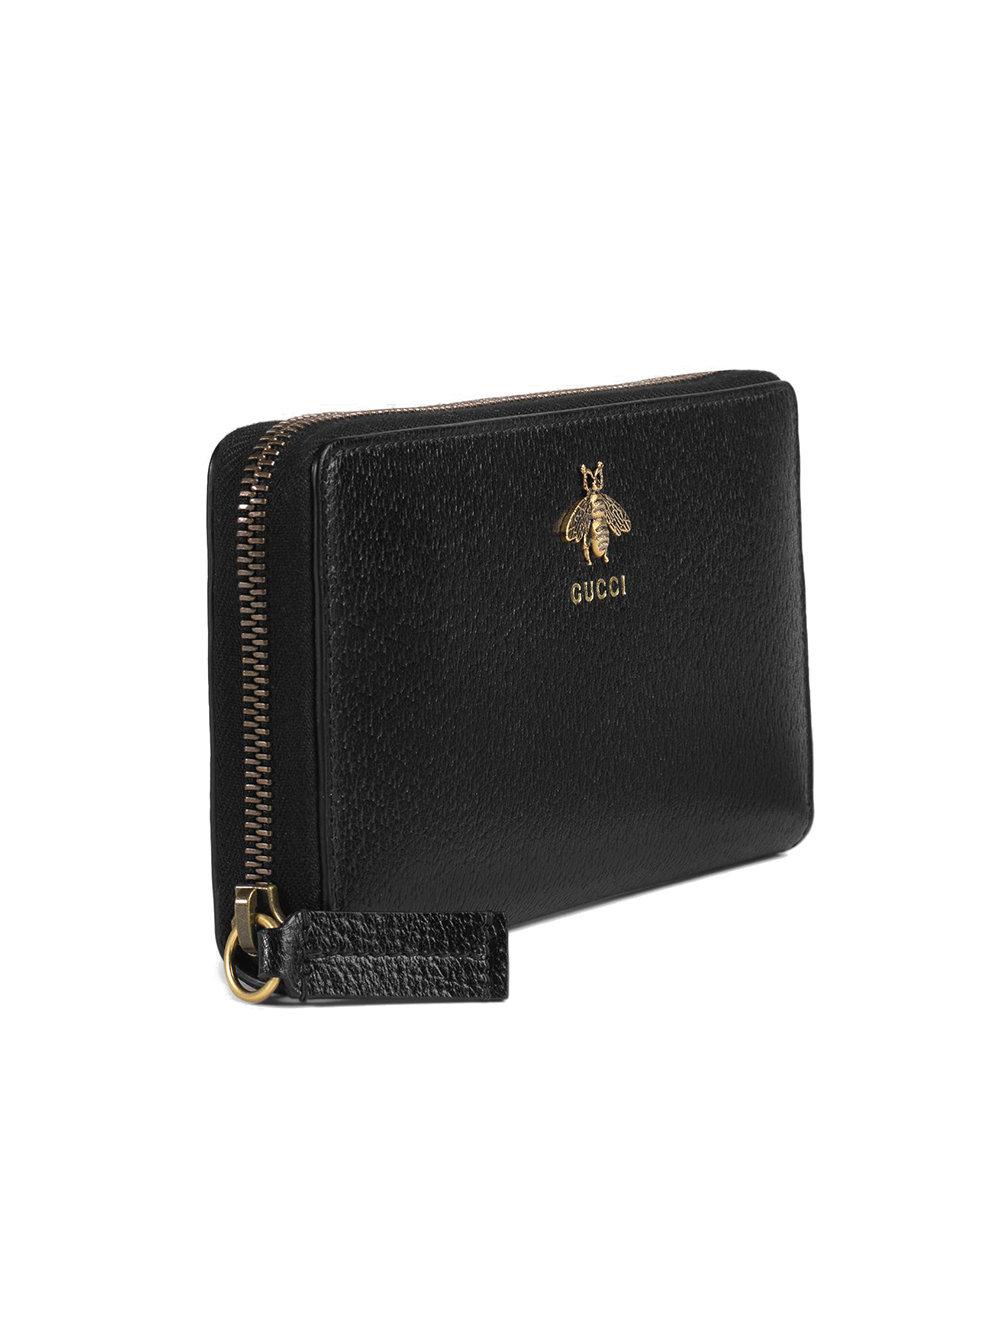 Gucci Animalier Leather Zip Around Wallet in Black for Men - Lyst